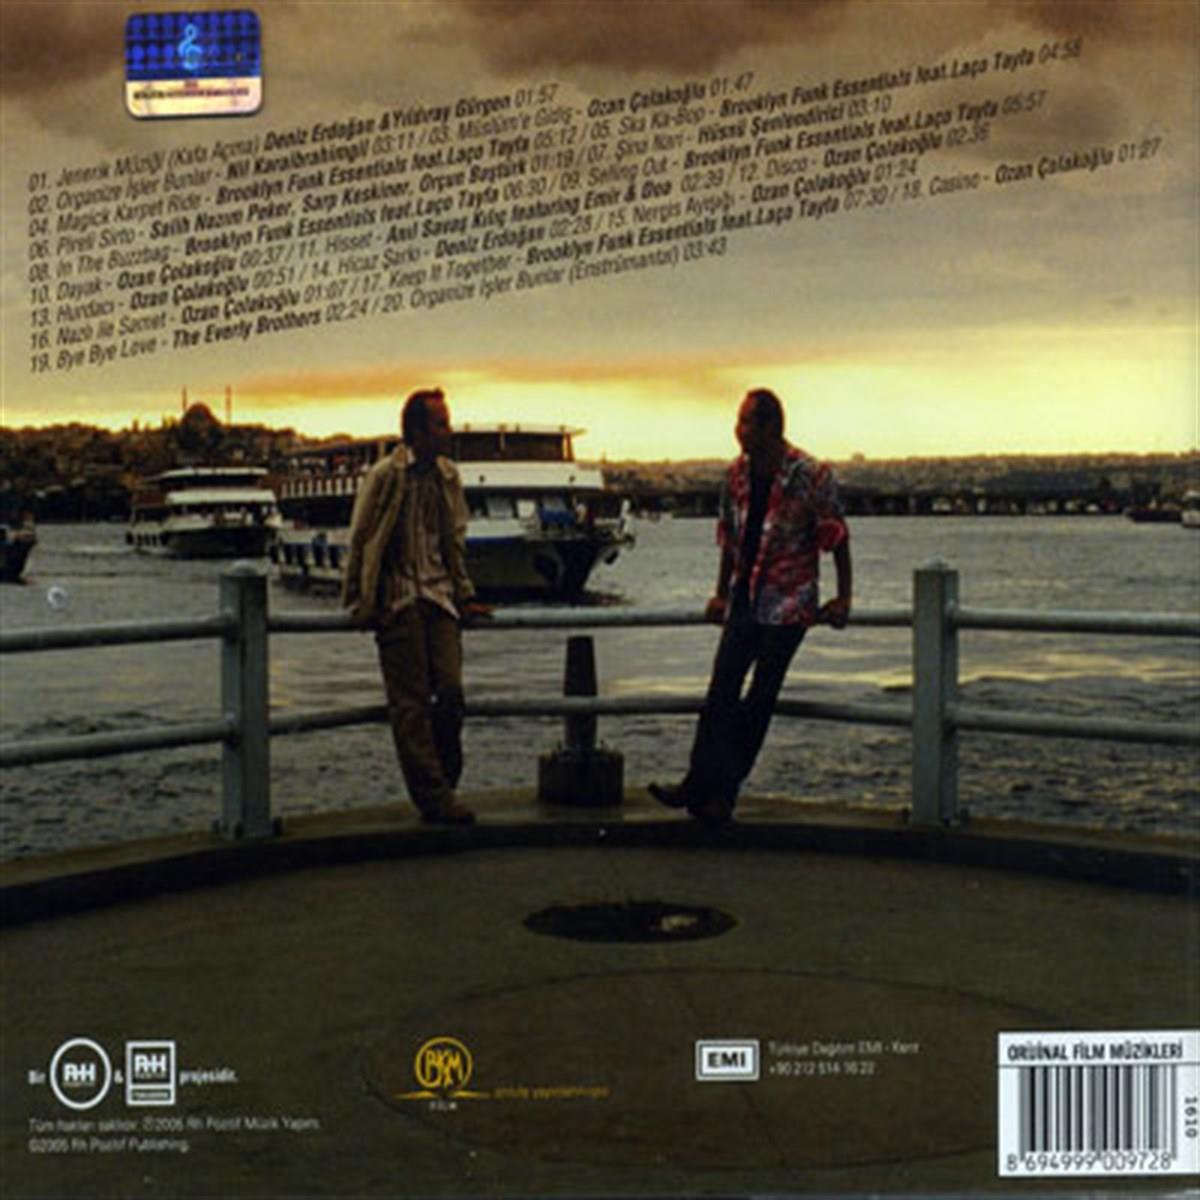 Organize Işler - Orginal Film Müzikleri (CD) | esenshop - Plak, LP, CD, DVD